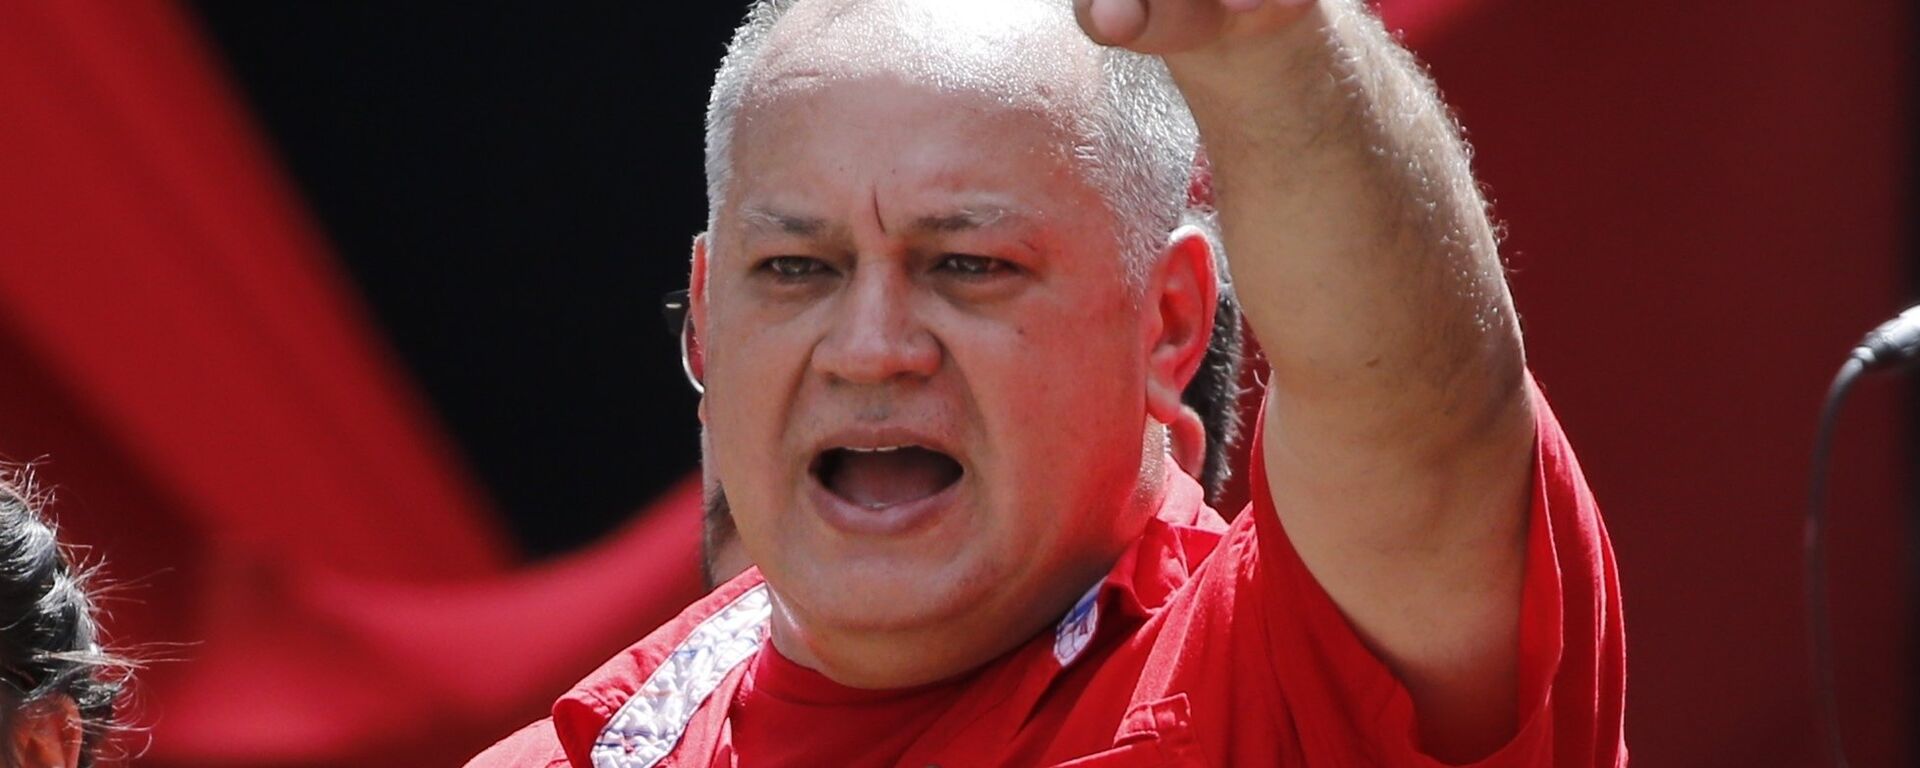 Diosdado Cabello, presidente de la Asamblea Nacional Constituyente de Venezuela - Sputnik Mundo, 1920, 11.10.2021